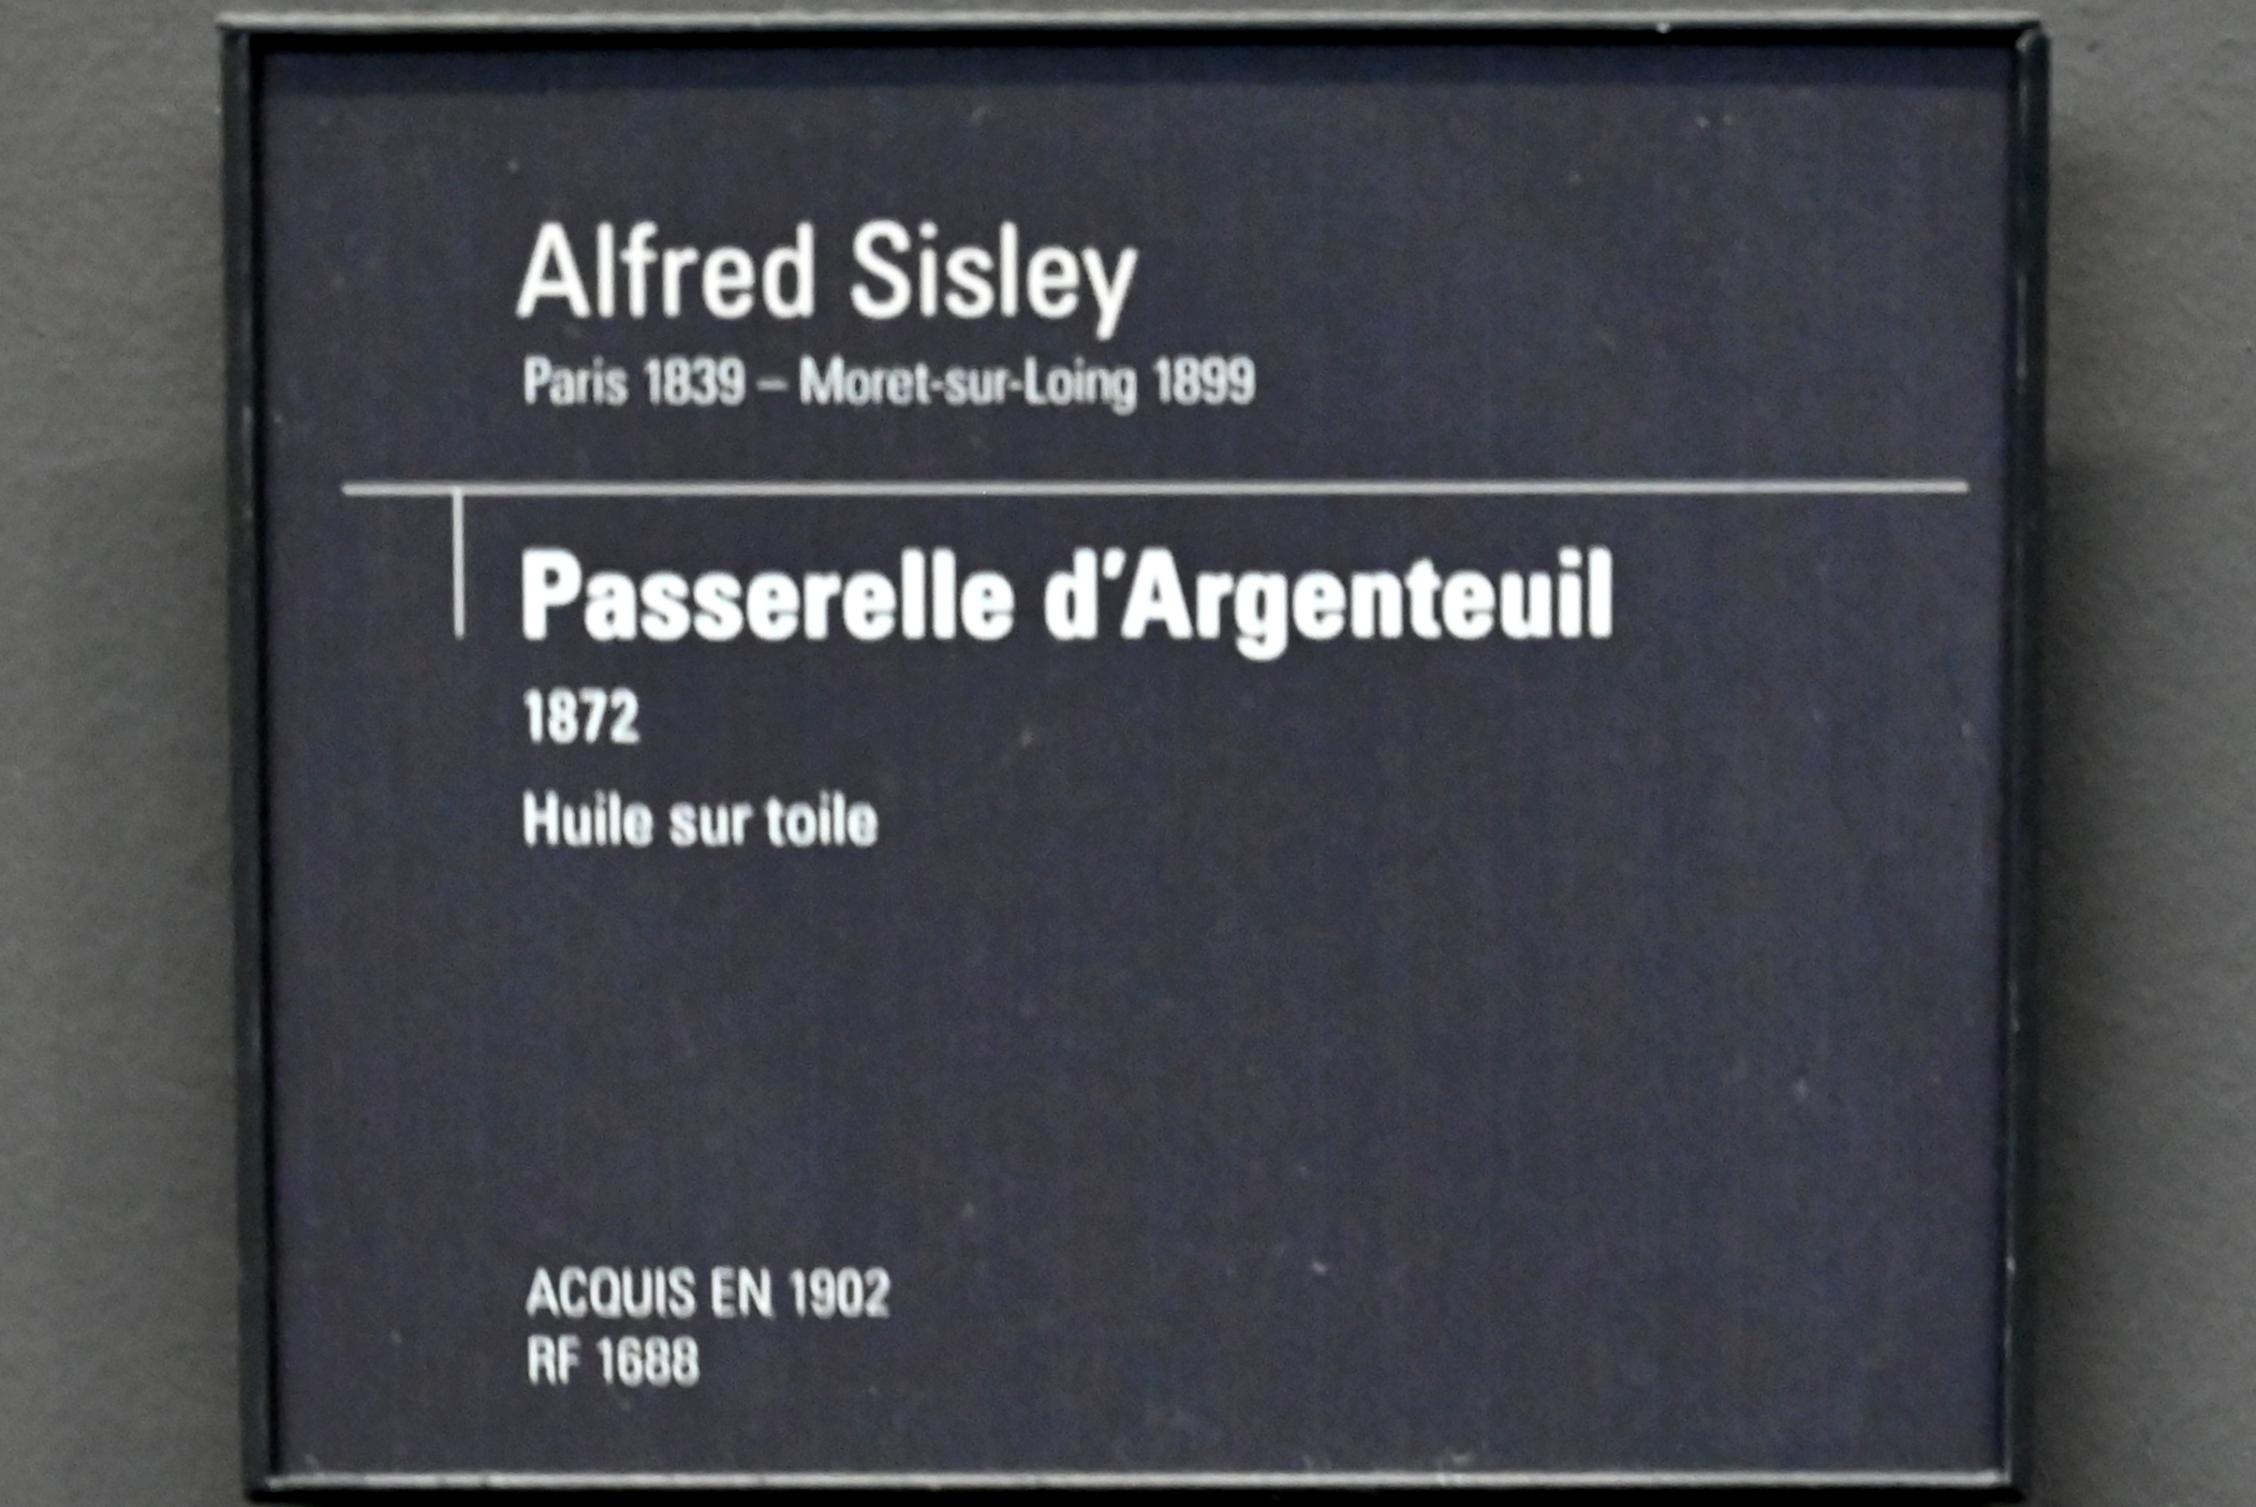 Alfred Sisley (1872–1896), Fußgängerbrücke in Argenteuil, Paris, Musée d’Orsay, 1872, Bild 2/2